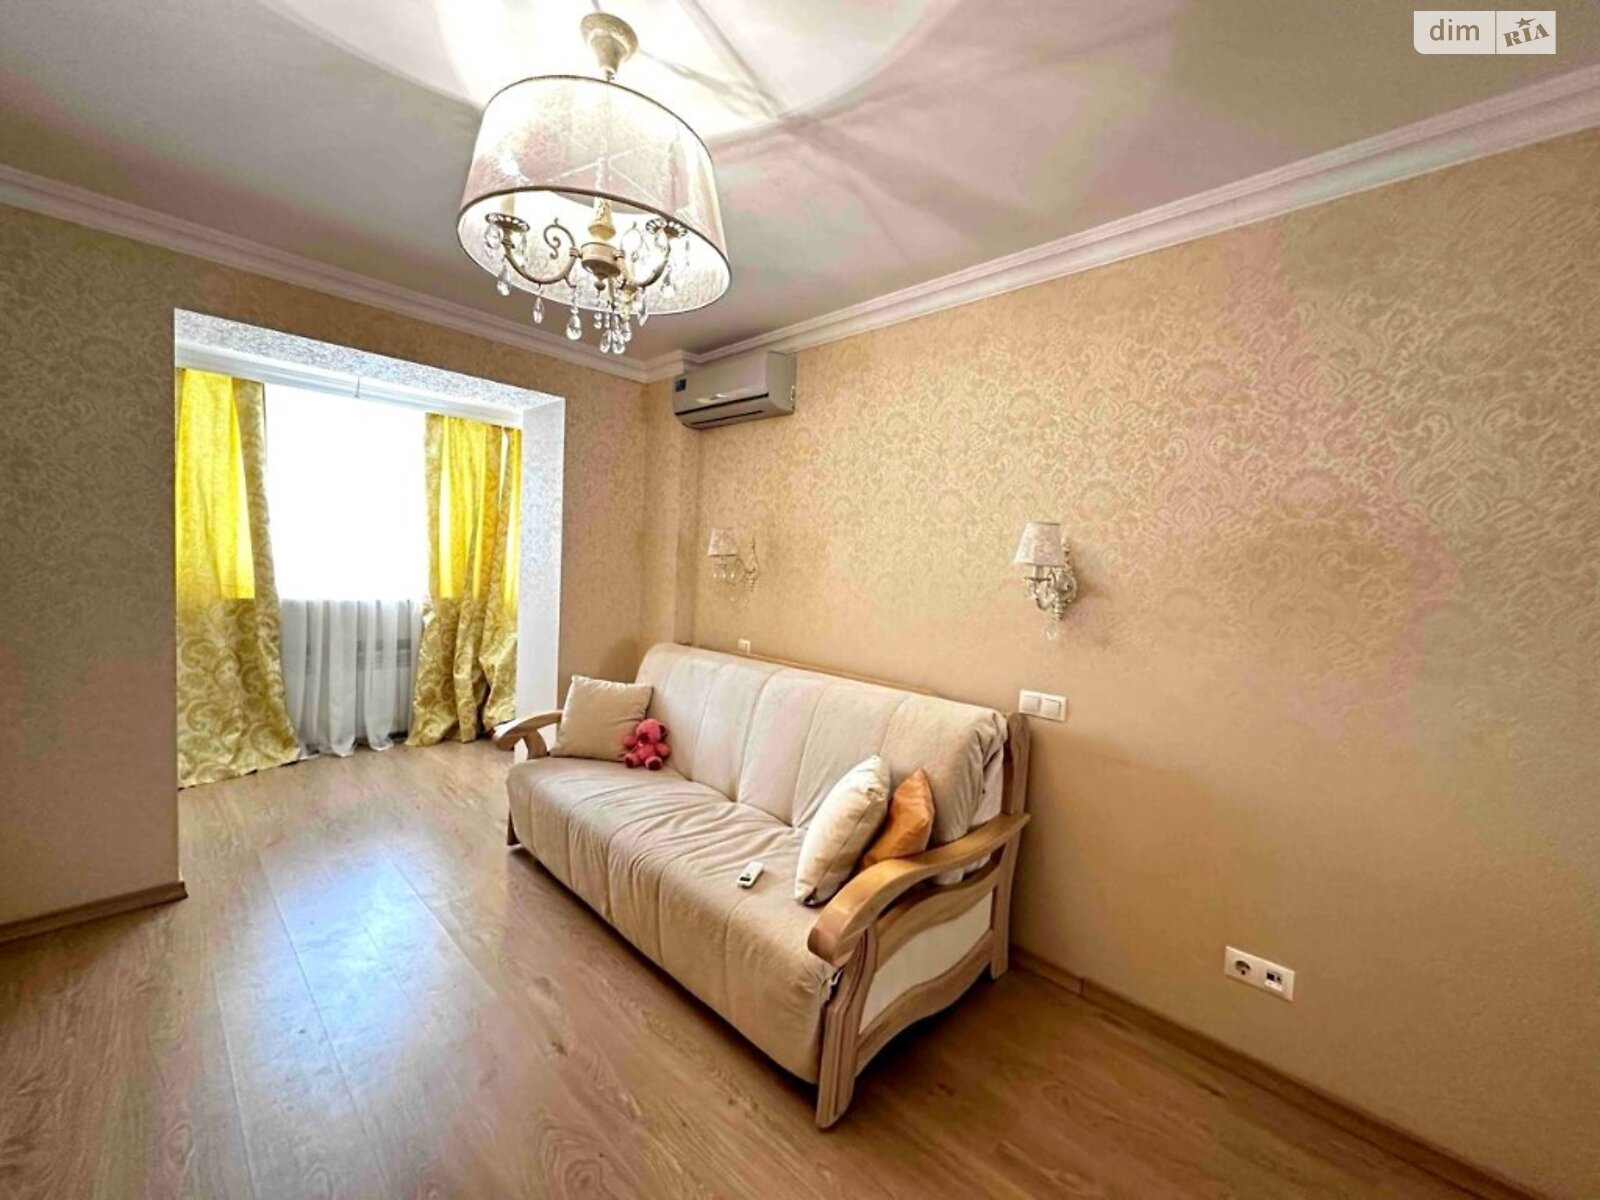 Продажа двухкомнатной квартиры в Днепре, на ул. Немировича-Данченко 64, район Самарский фото 1